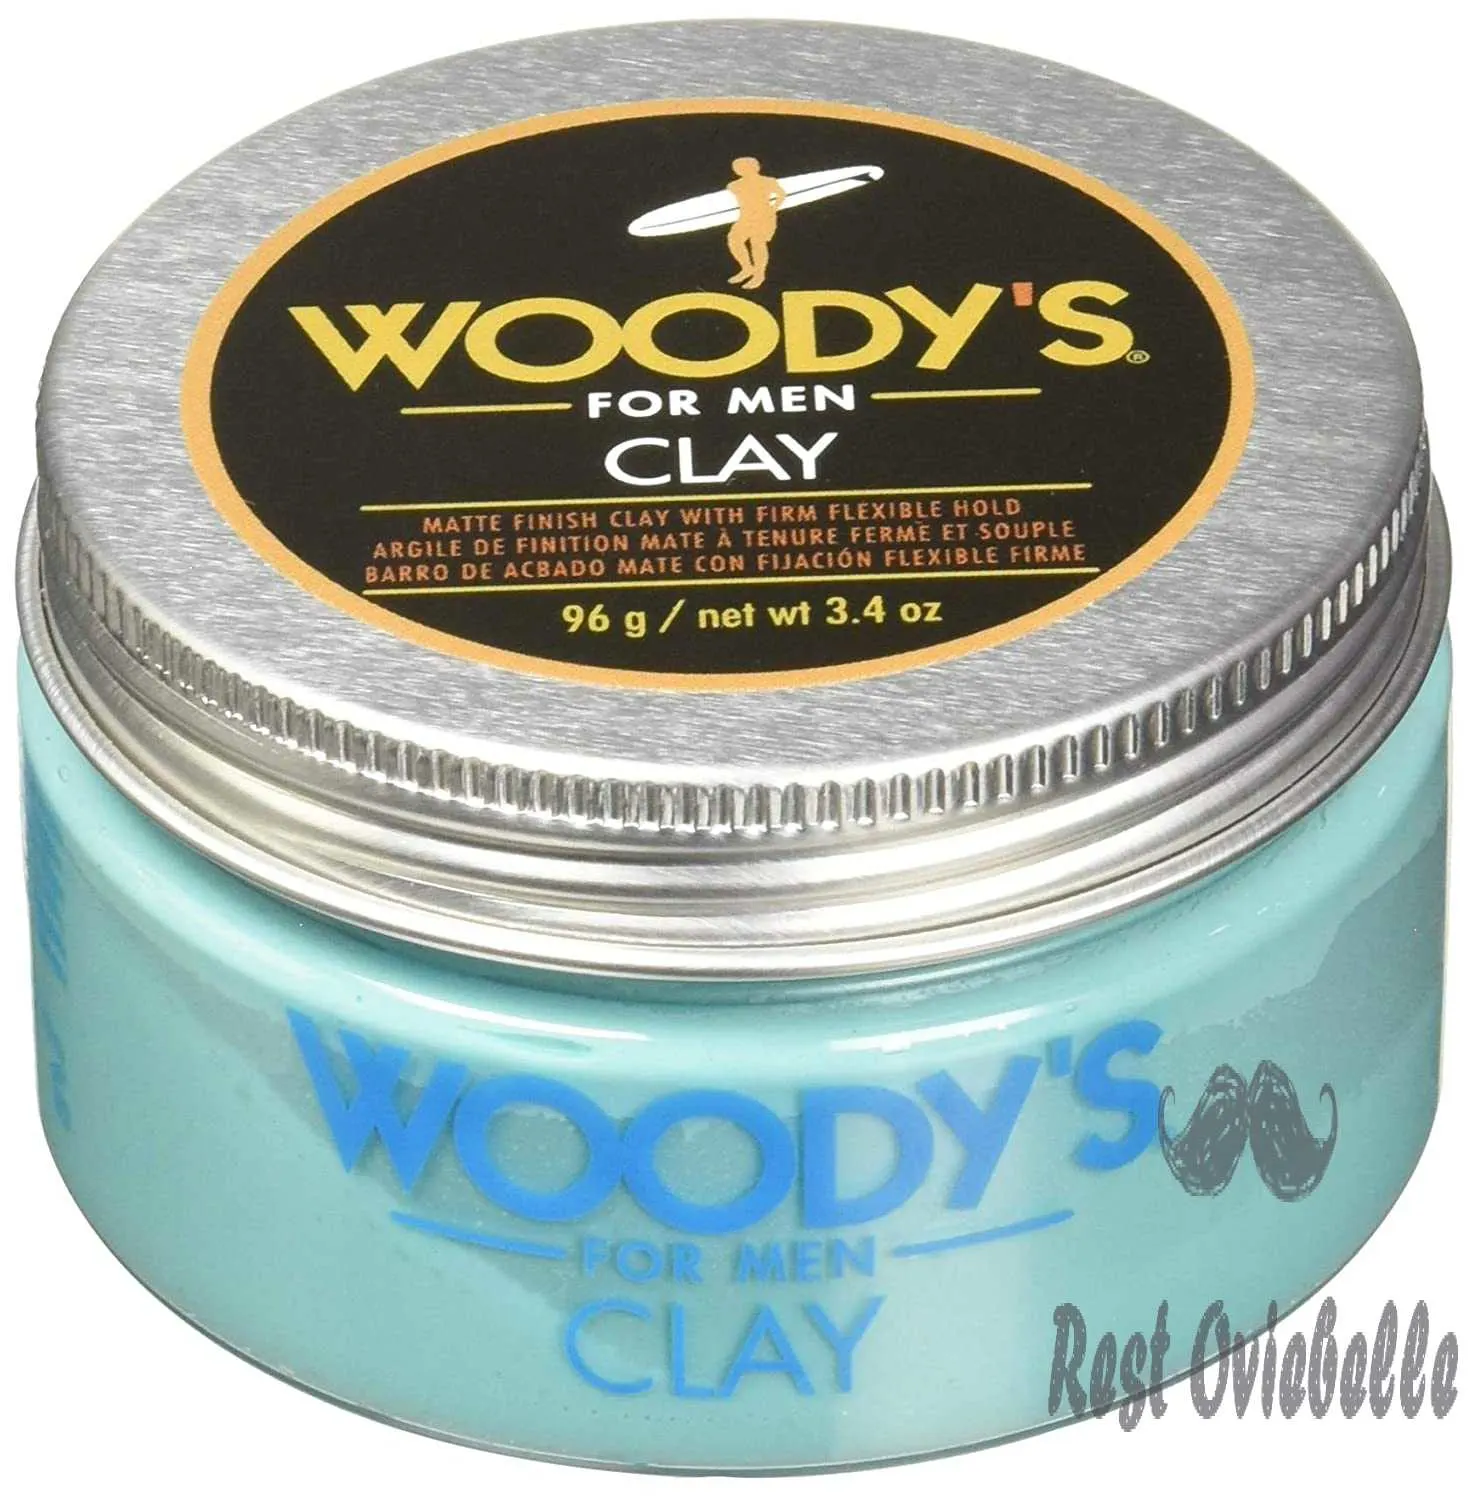 Woody's Clay for Men, Matte